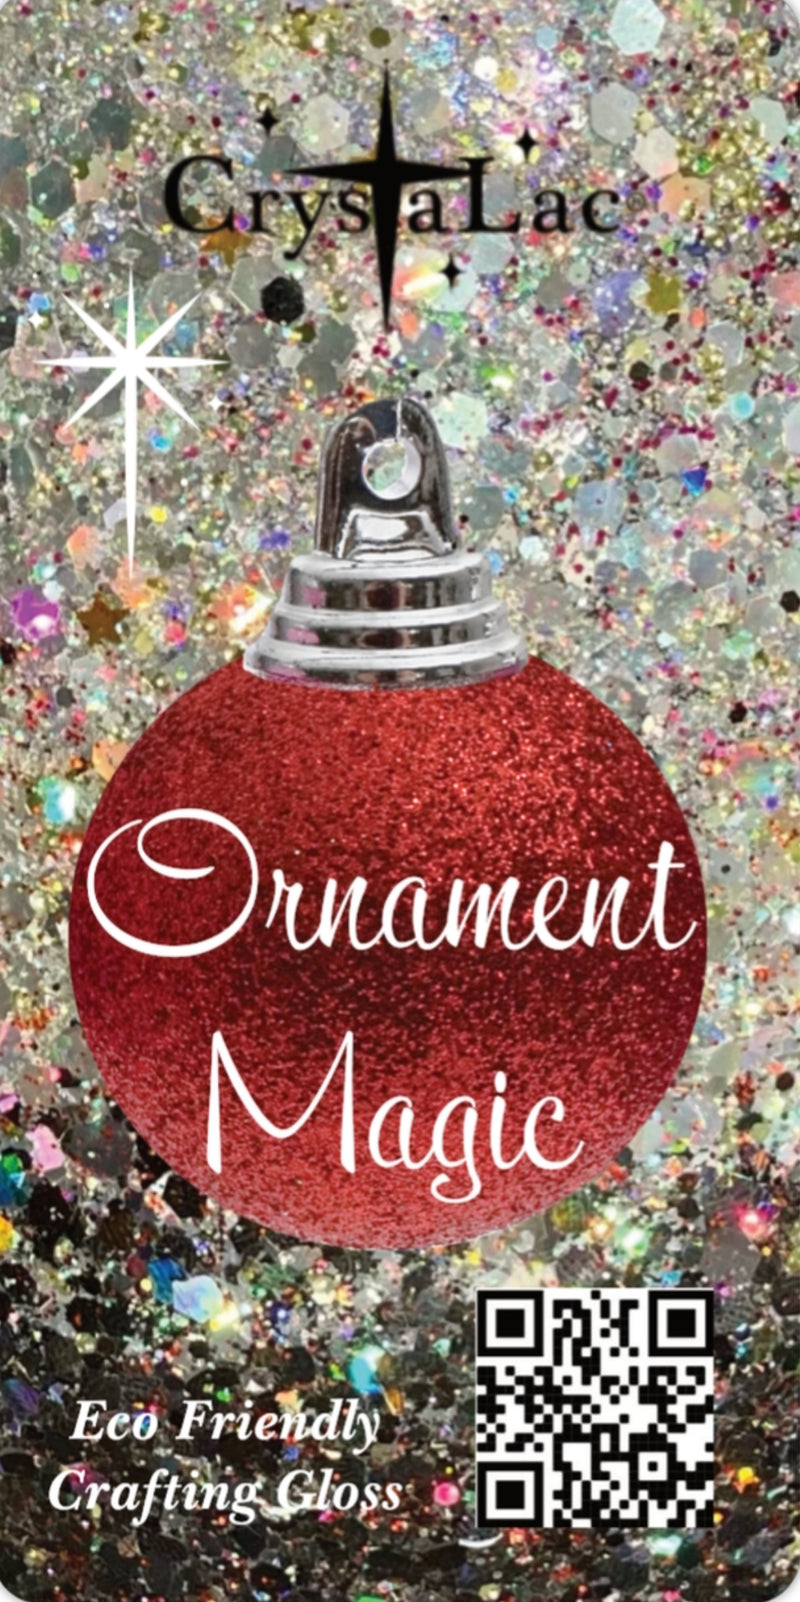 CrystaLac Ornament Magic Eco Friendly Crafting Gloss